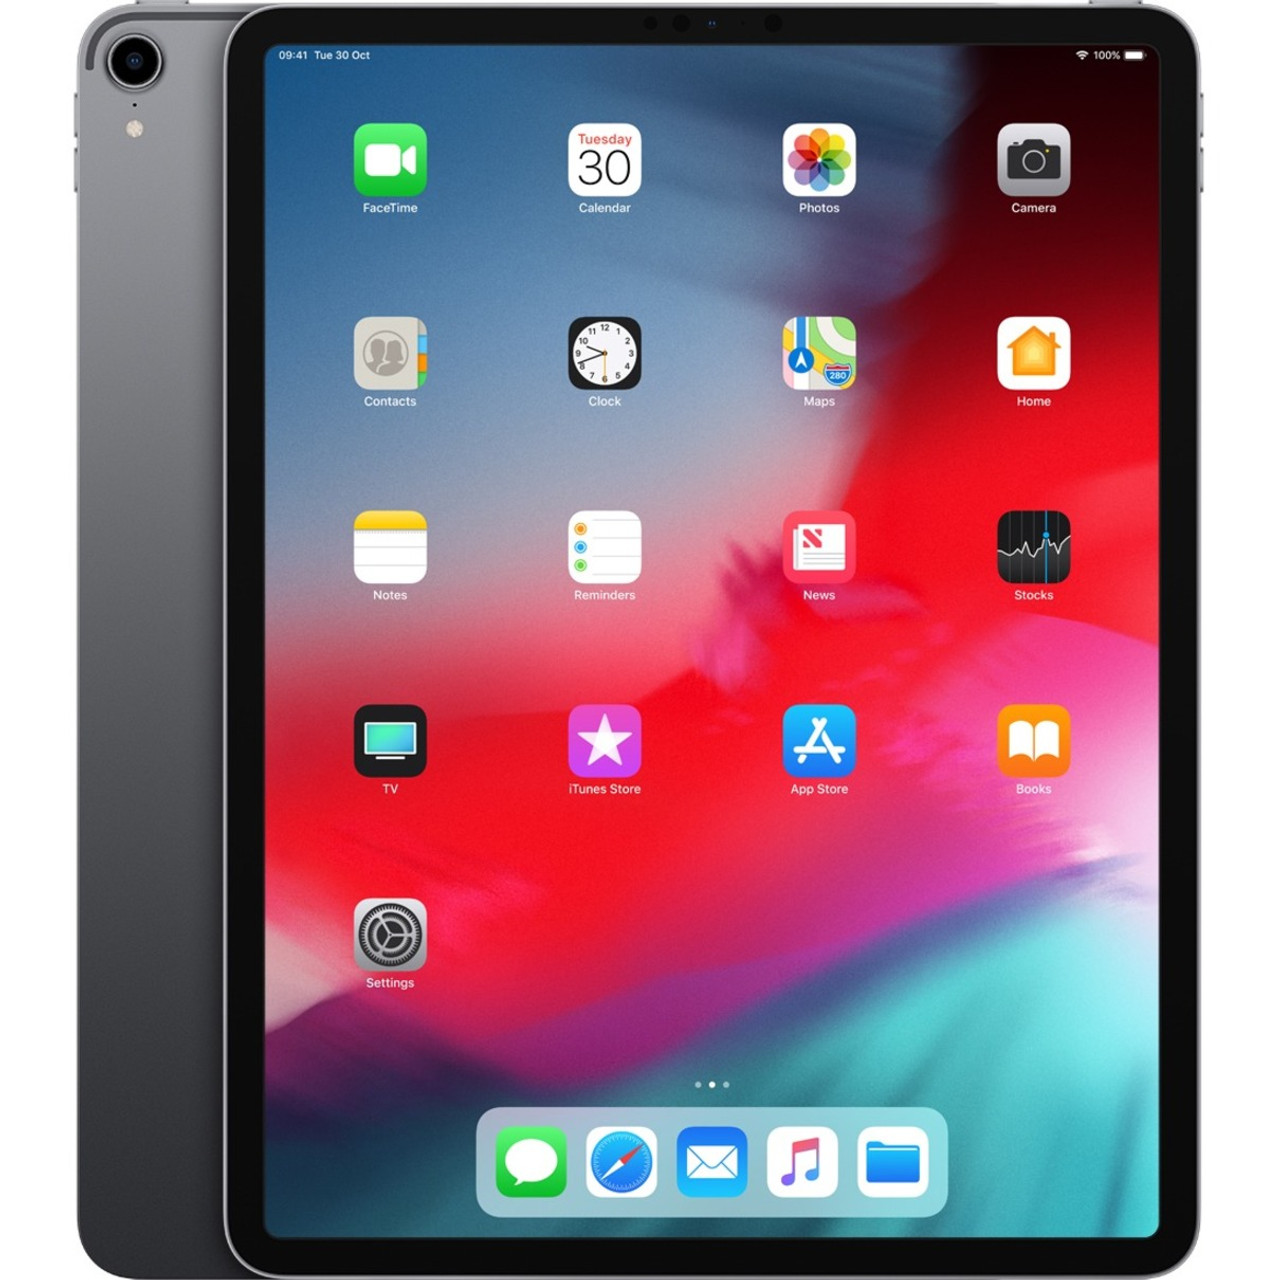 Apple iPad Pro (3rd Generation) Tablet - 12.9" - 64 GB Storage - iOS 12 - Space Gray - MTEL2LL/A